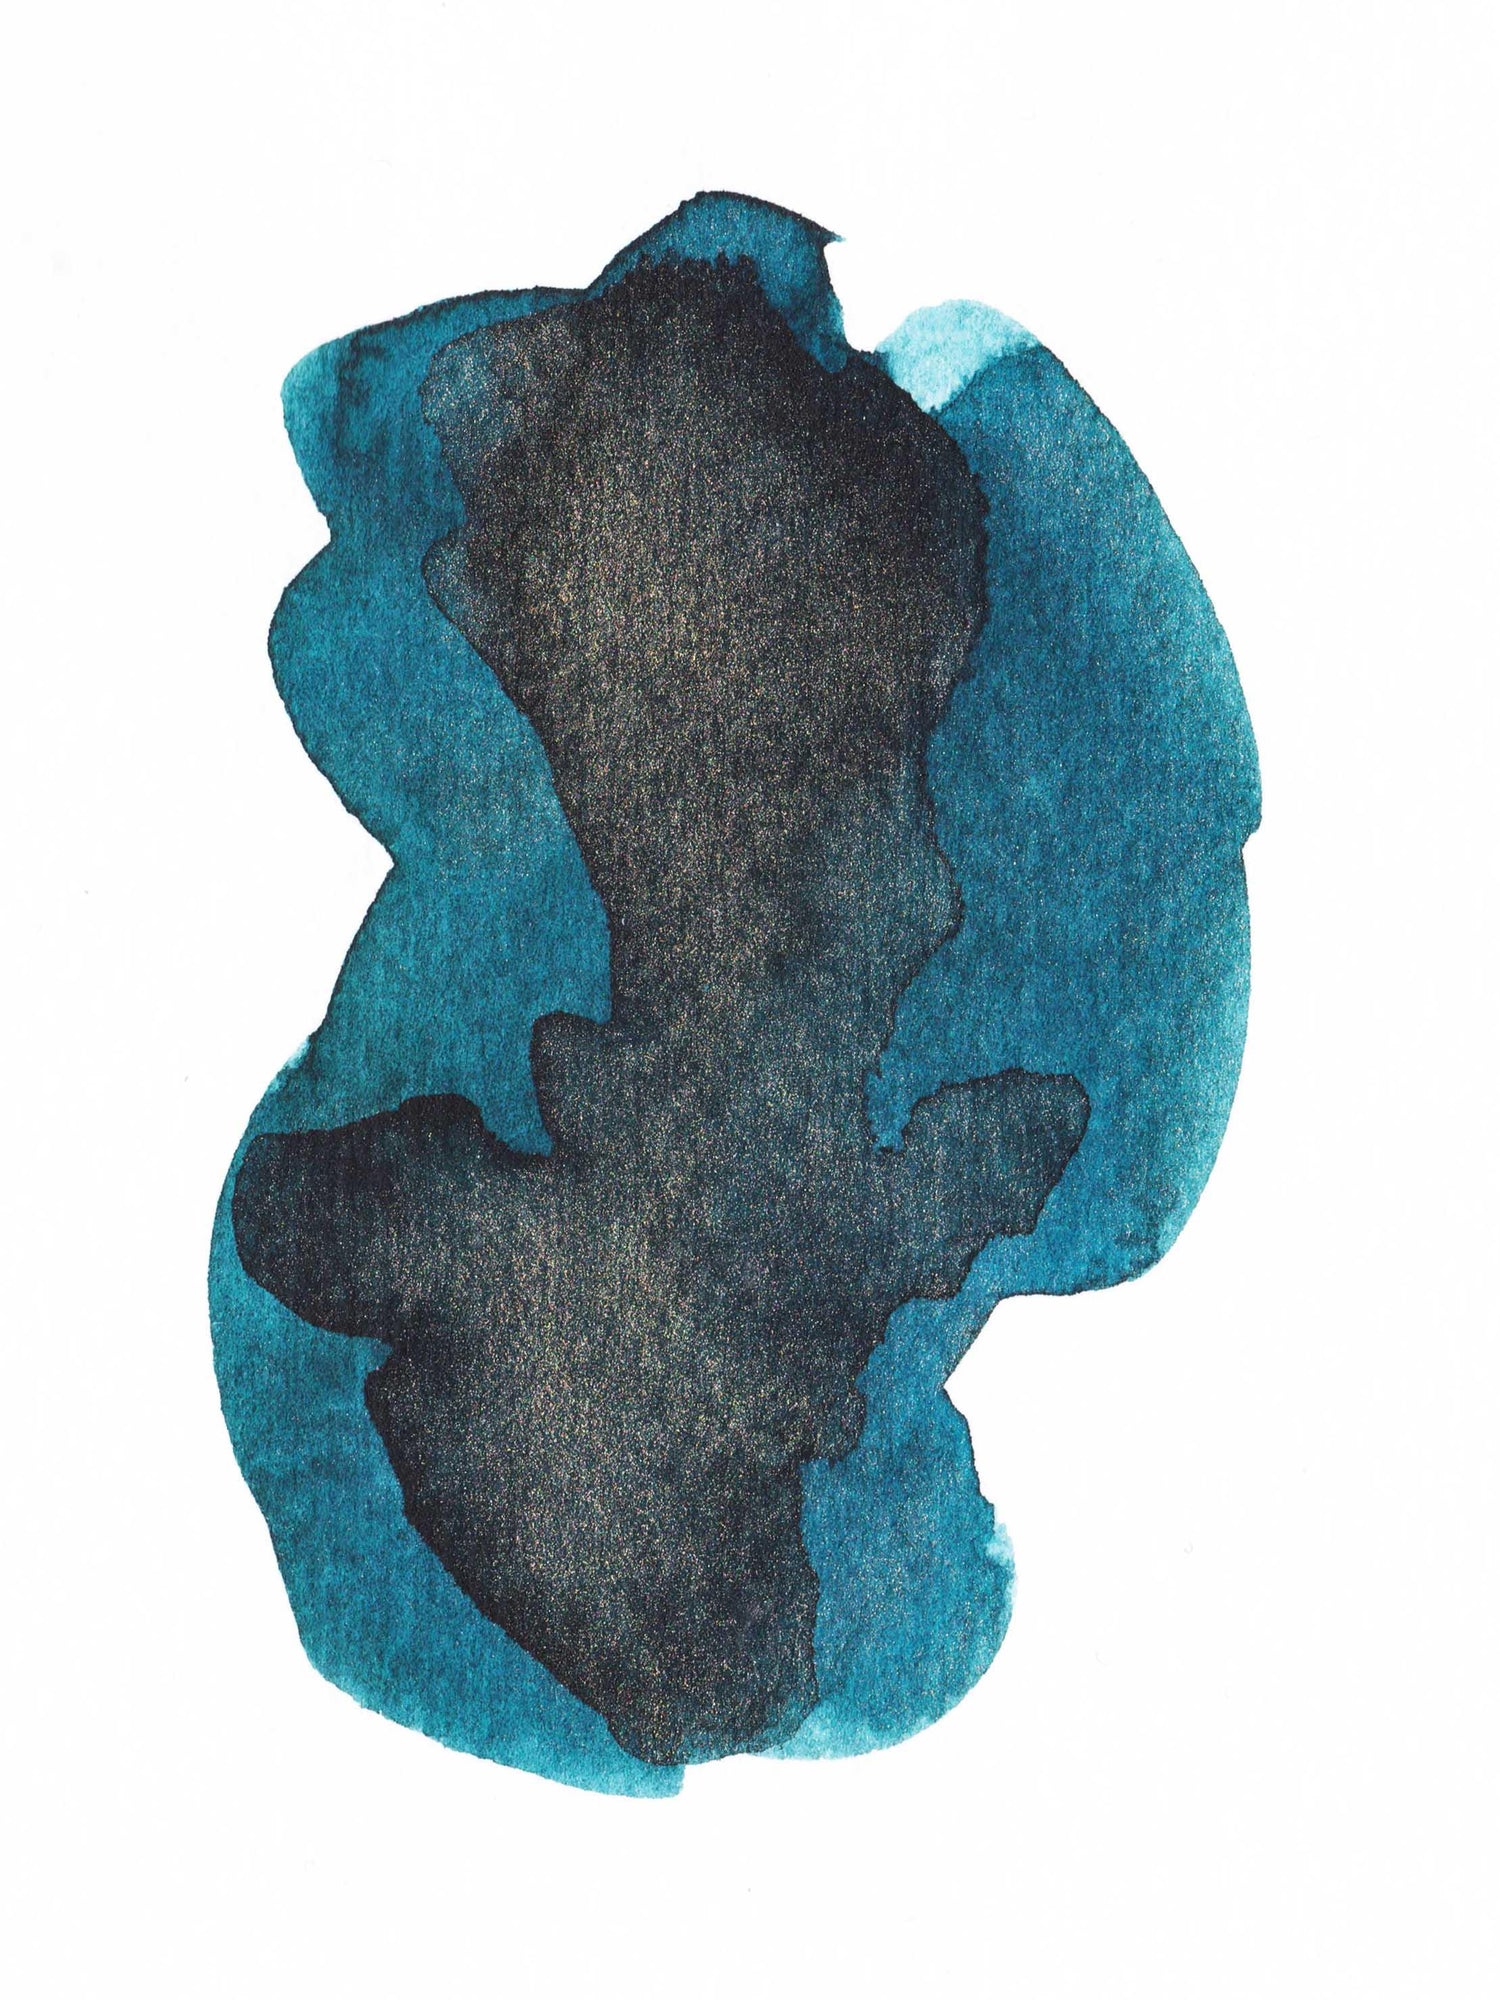 Blue and Black Abstract Art Print - AdriLunaStudio